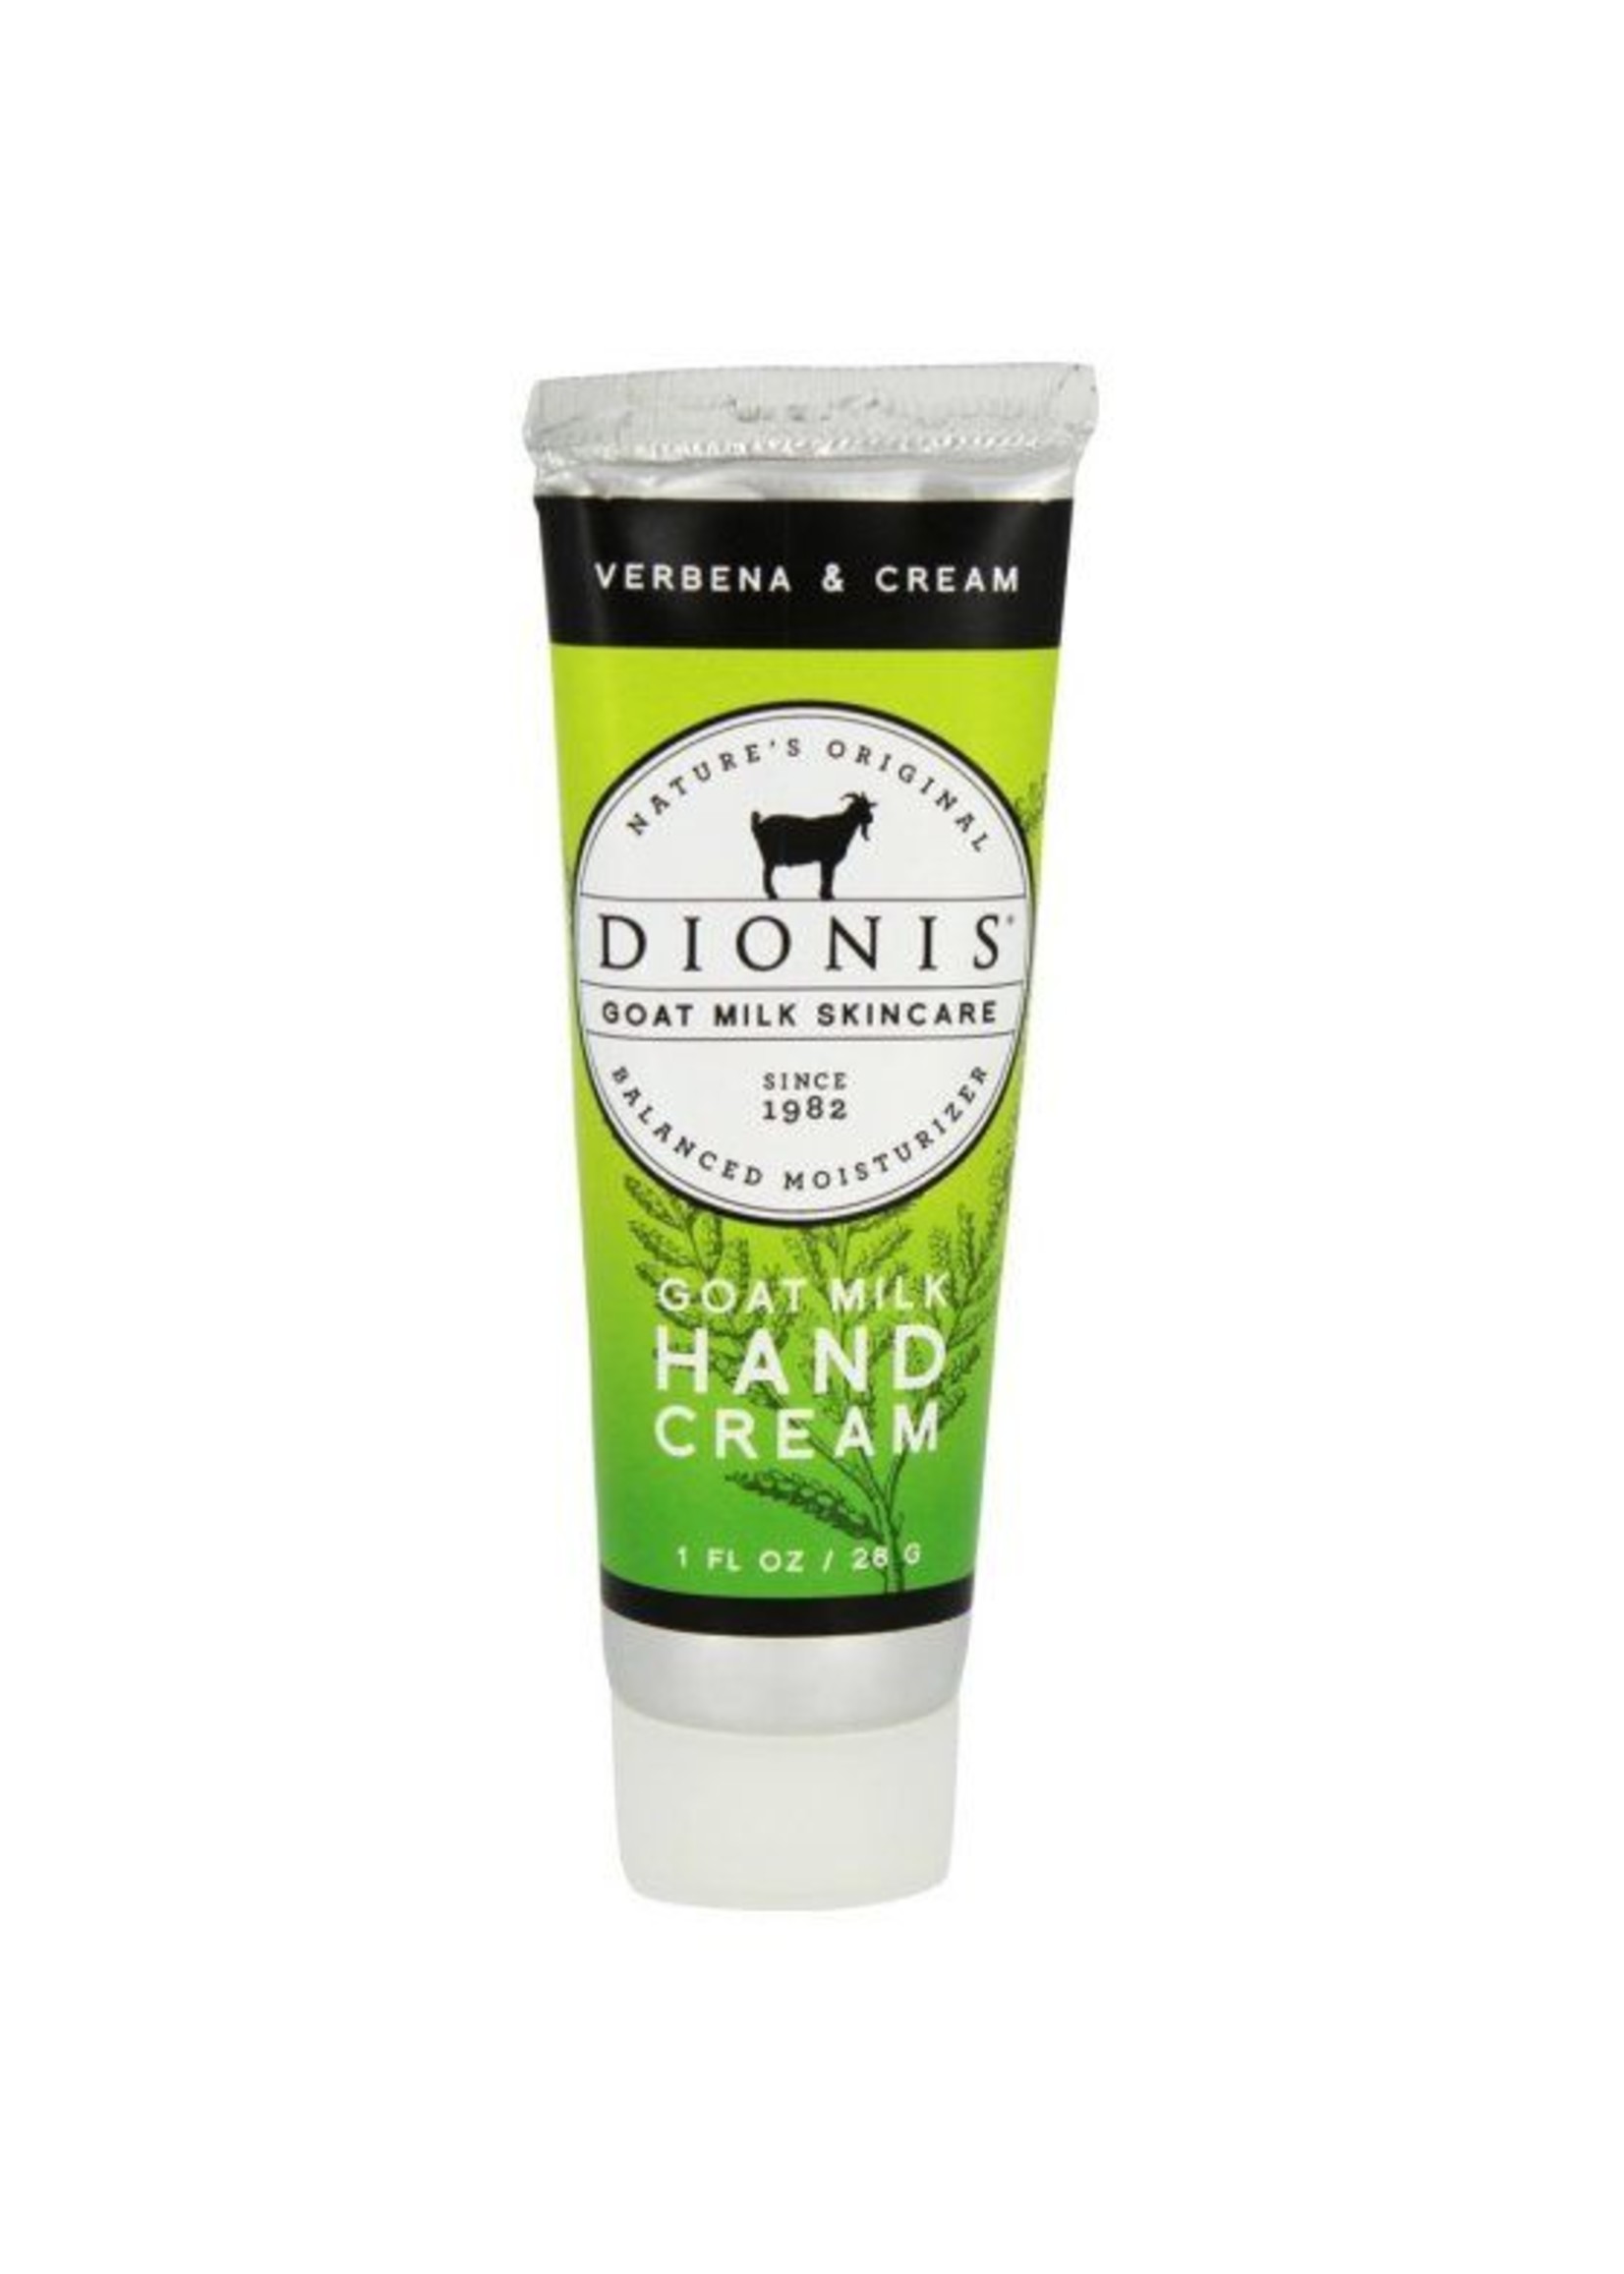 Dionnis 1 oz Hand Cream